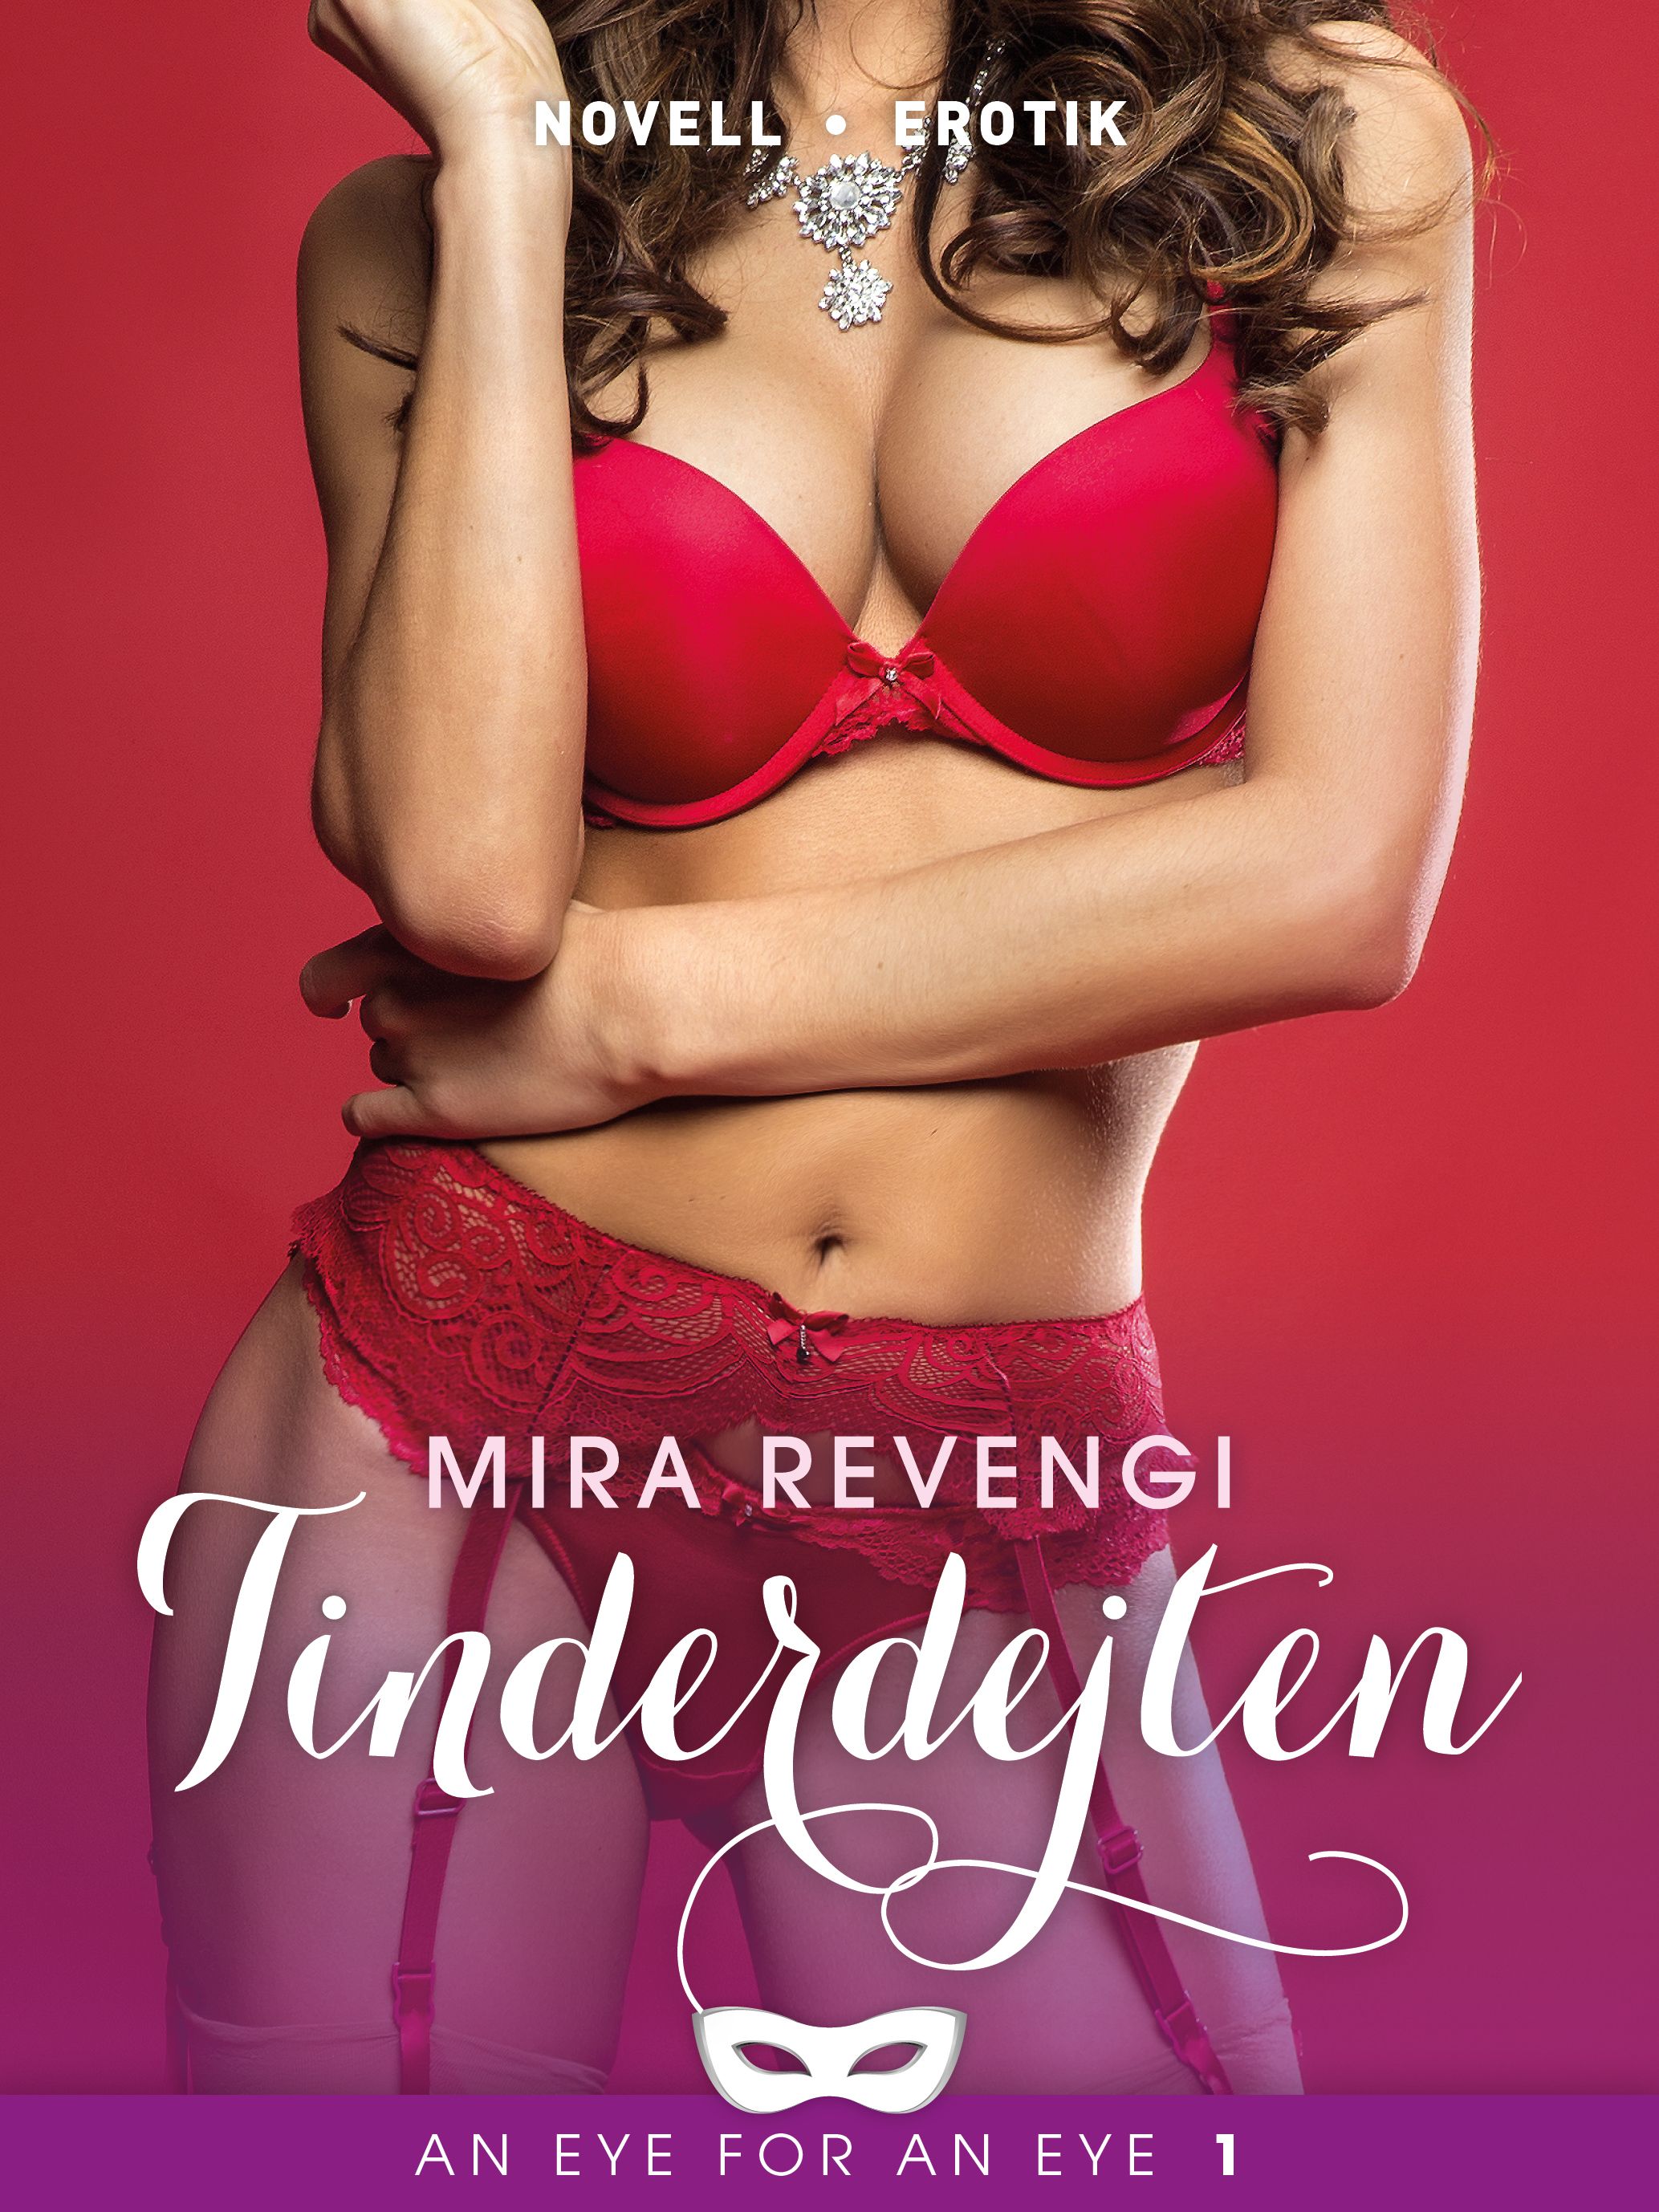 Tinderdejten, eBook by Mira Revengi